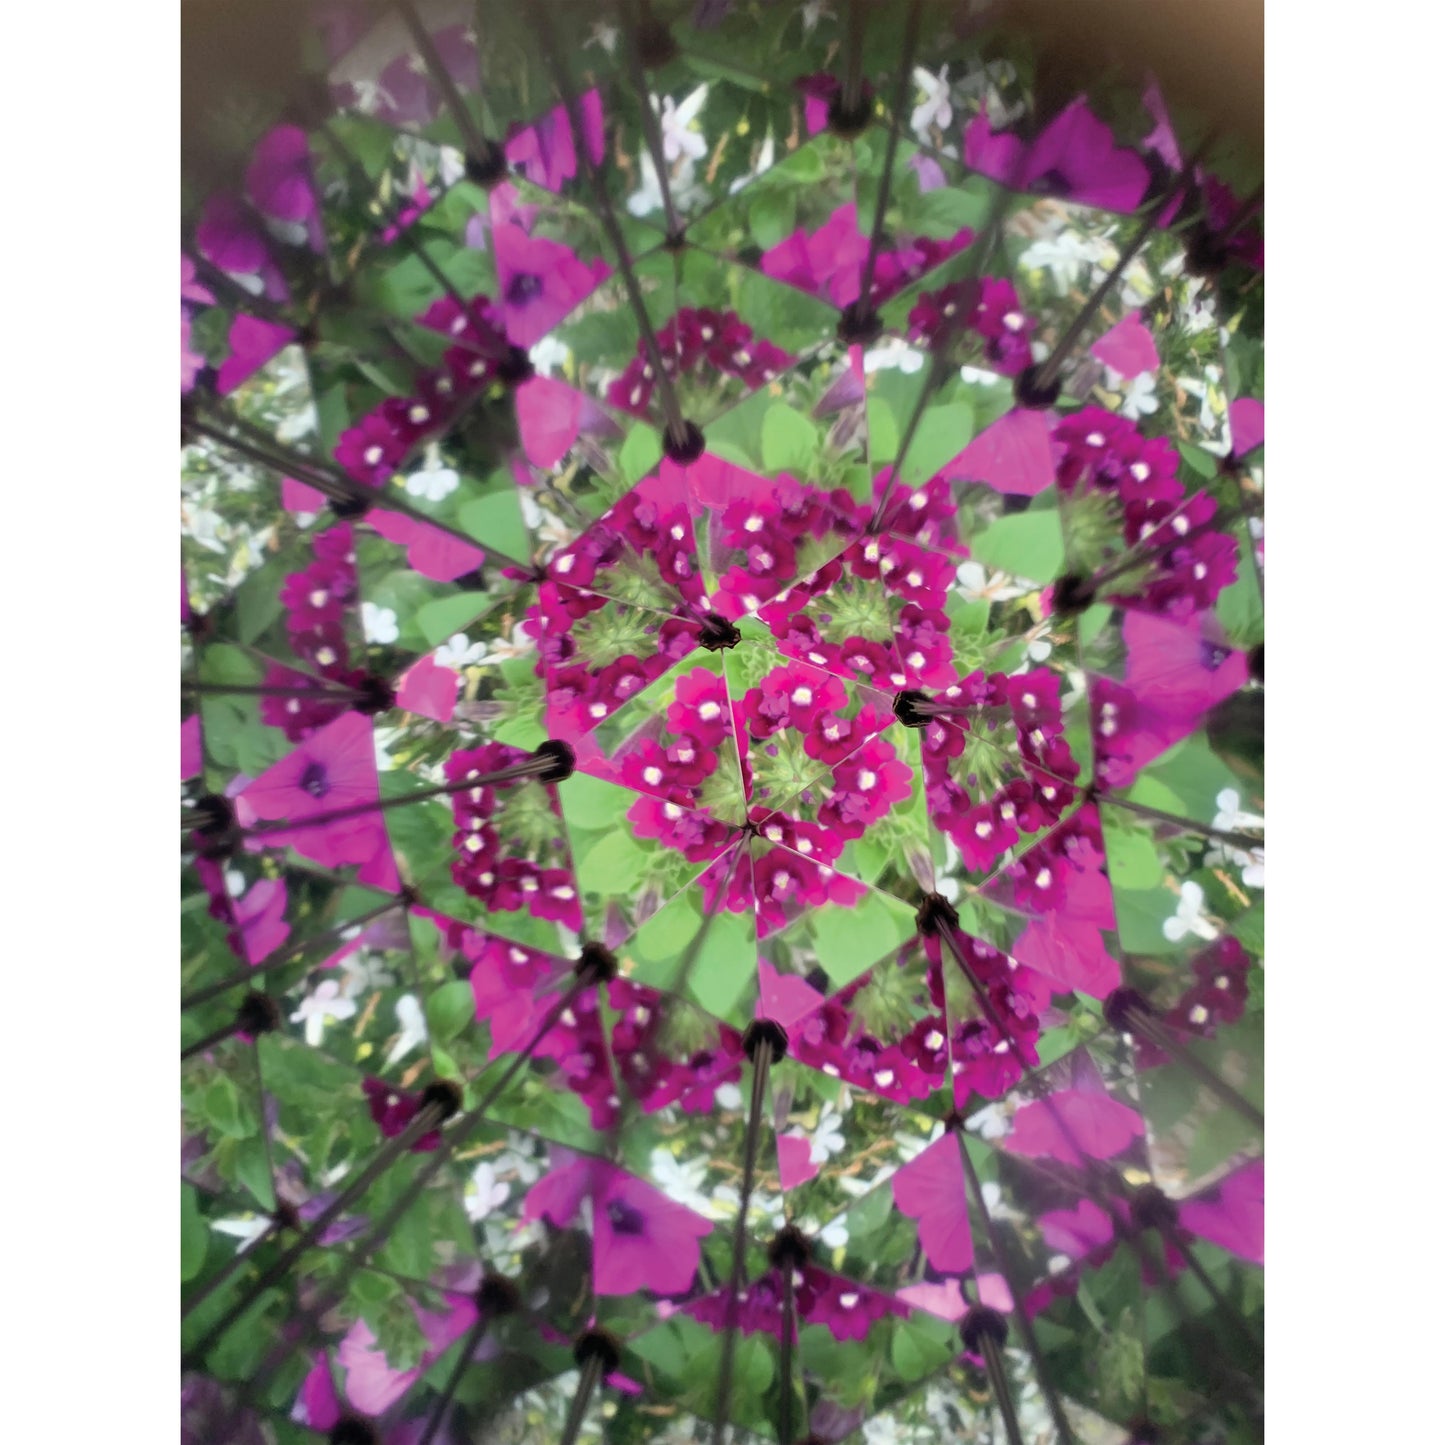 Kaleidoscope - Nature